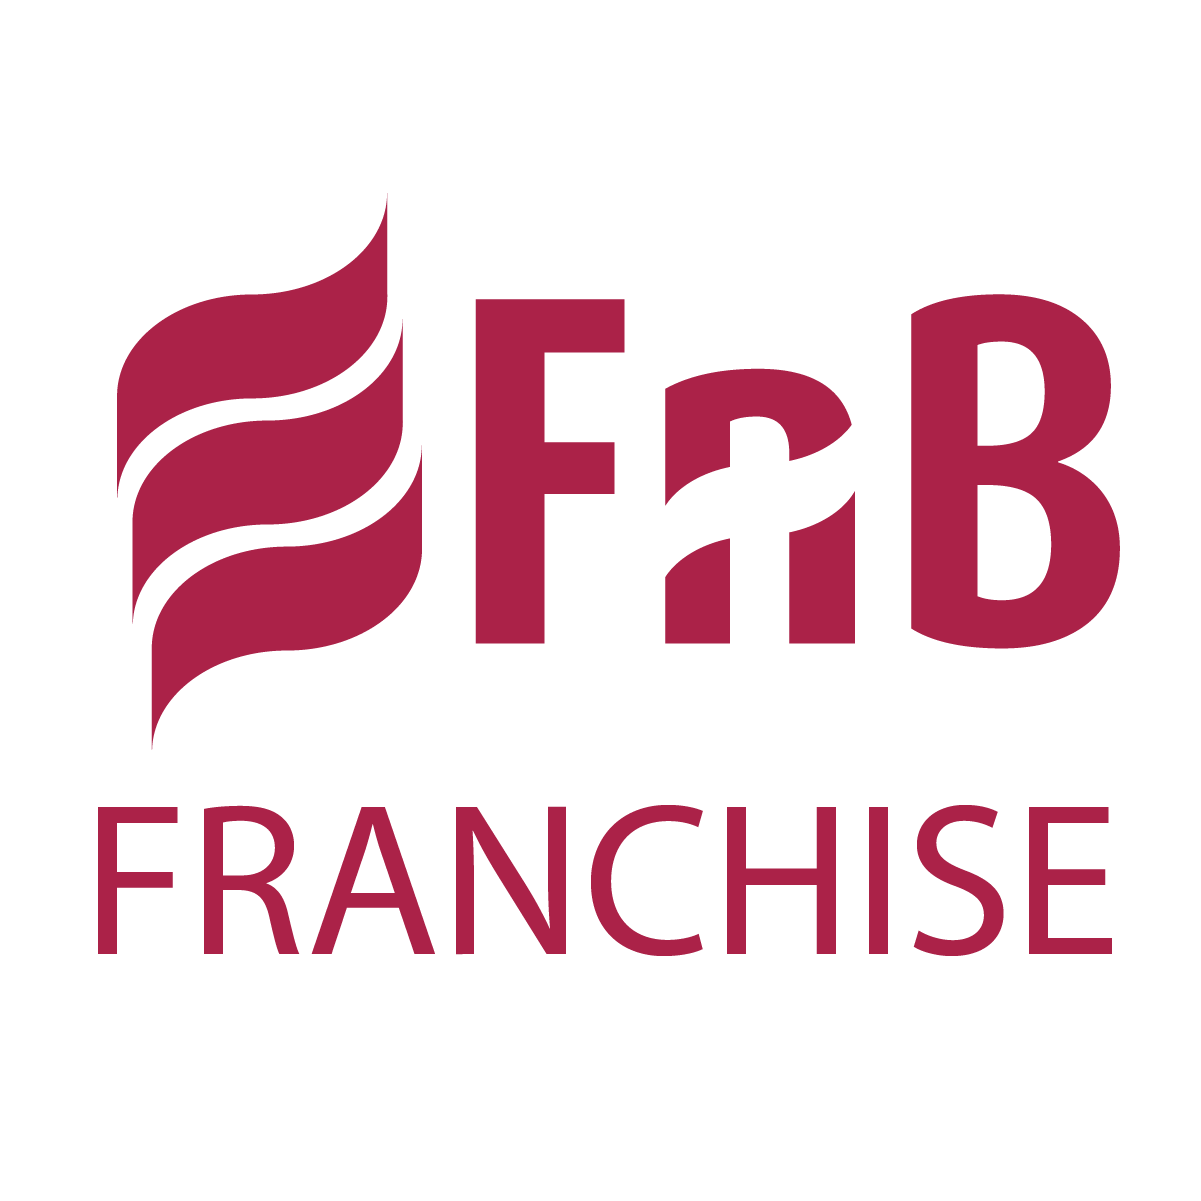 FnB Franchise